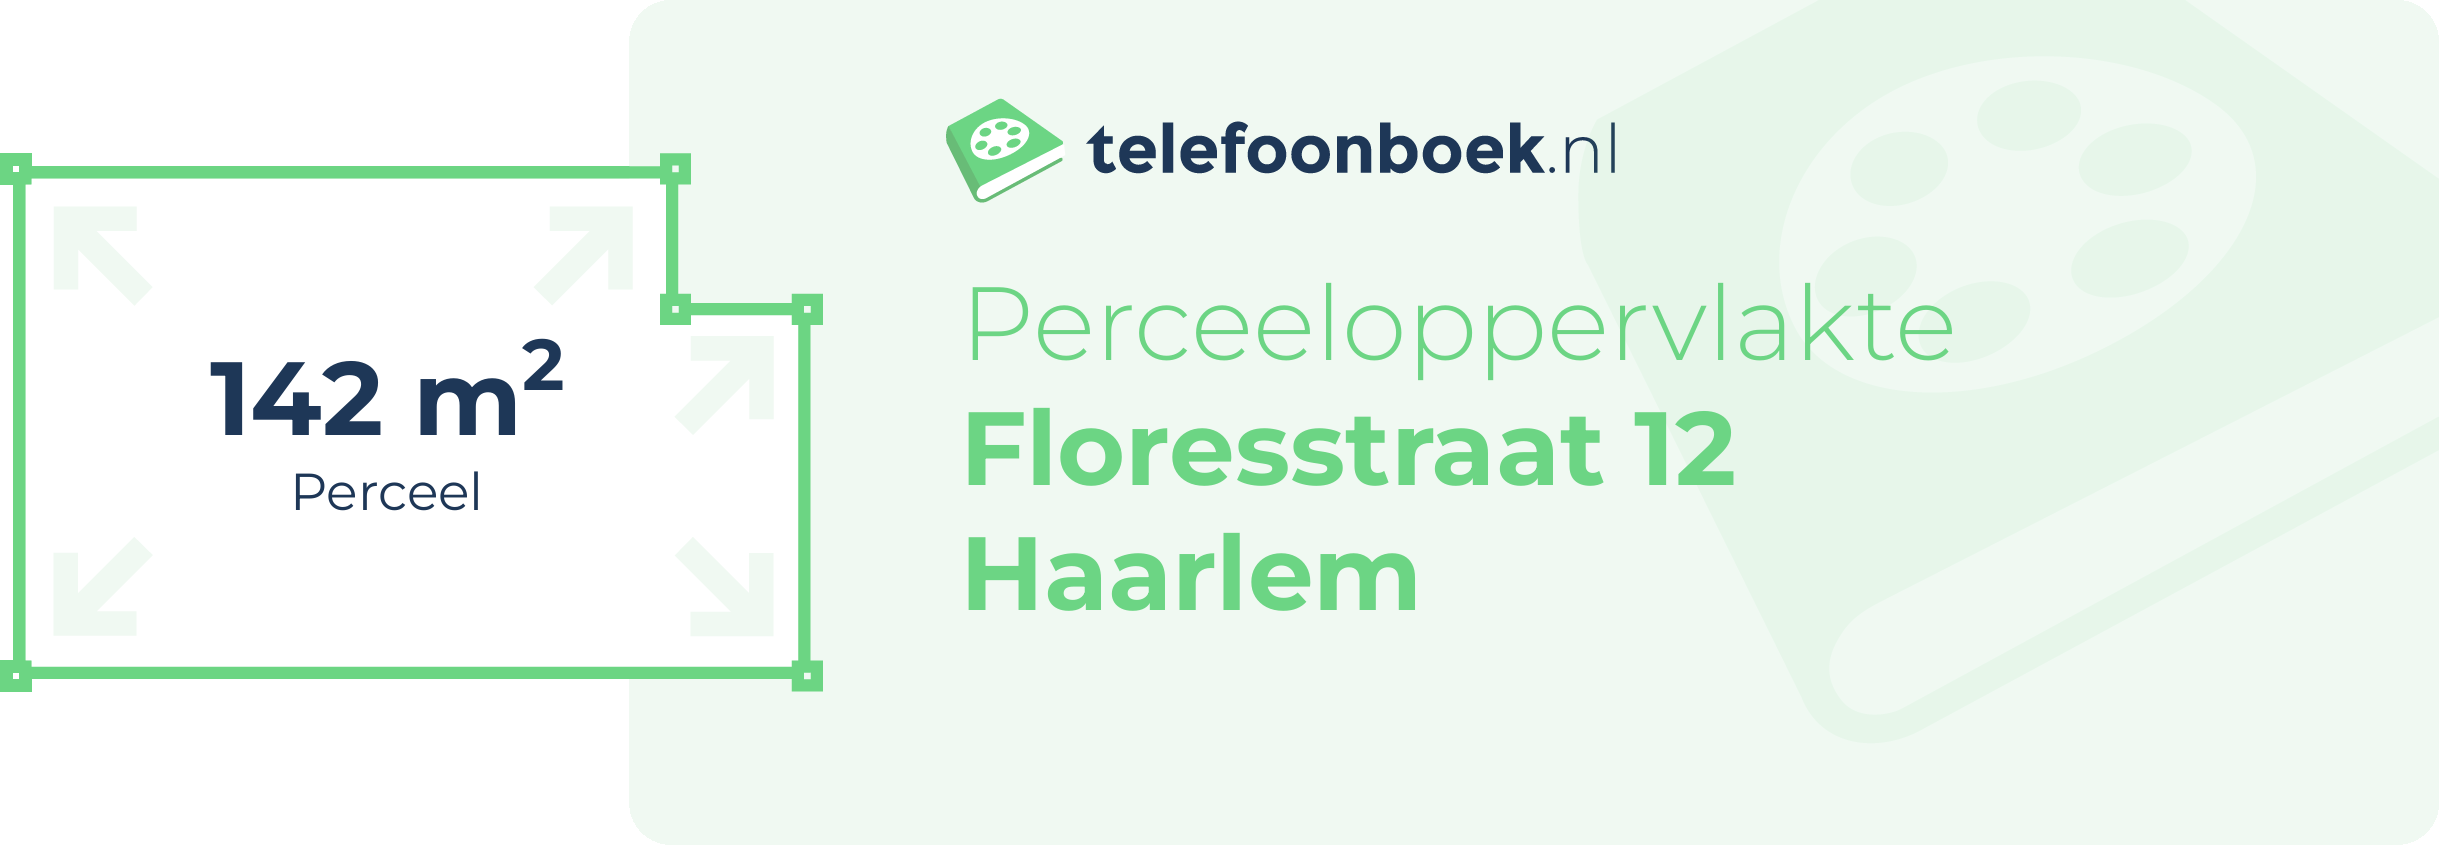 Perceeloppervlakte Floresstraat 12 Haarlem